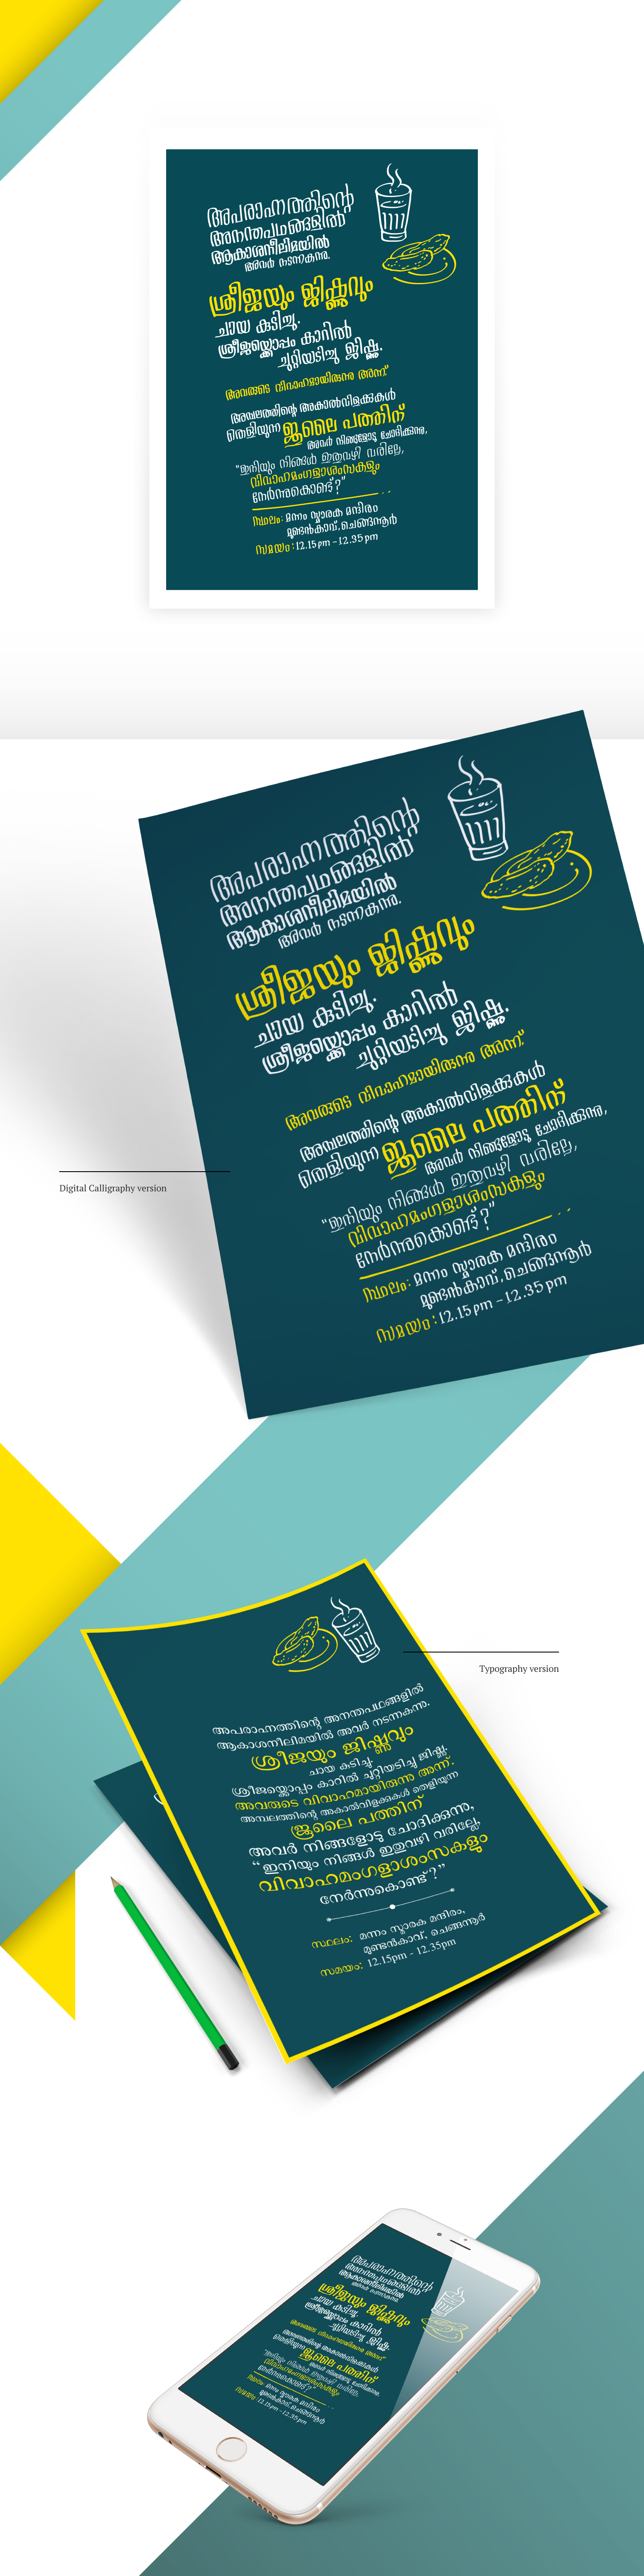 Malayalam casual wedding invite design on Behance